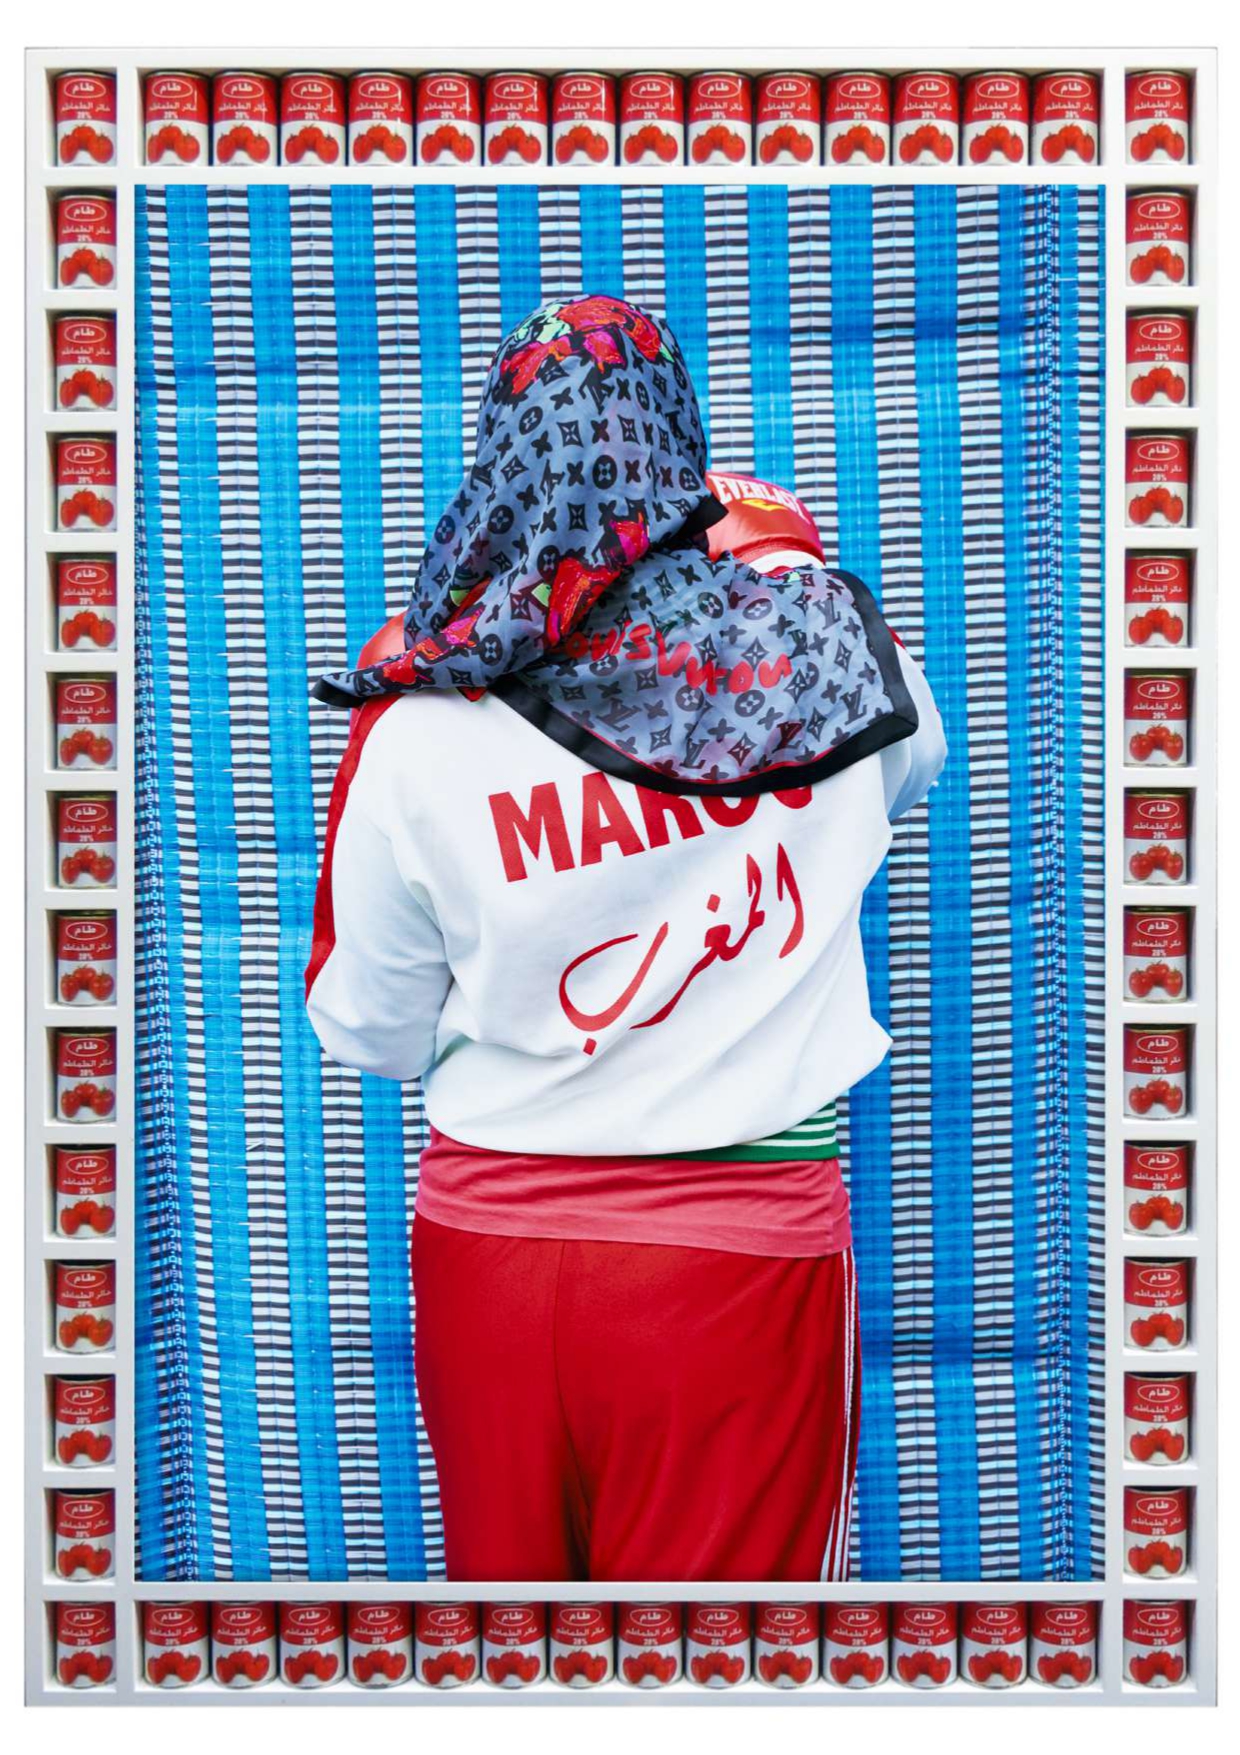 The Wick - Hassan Hajjaj, Maroc's Back, 2011. 193 Gallery